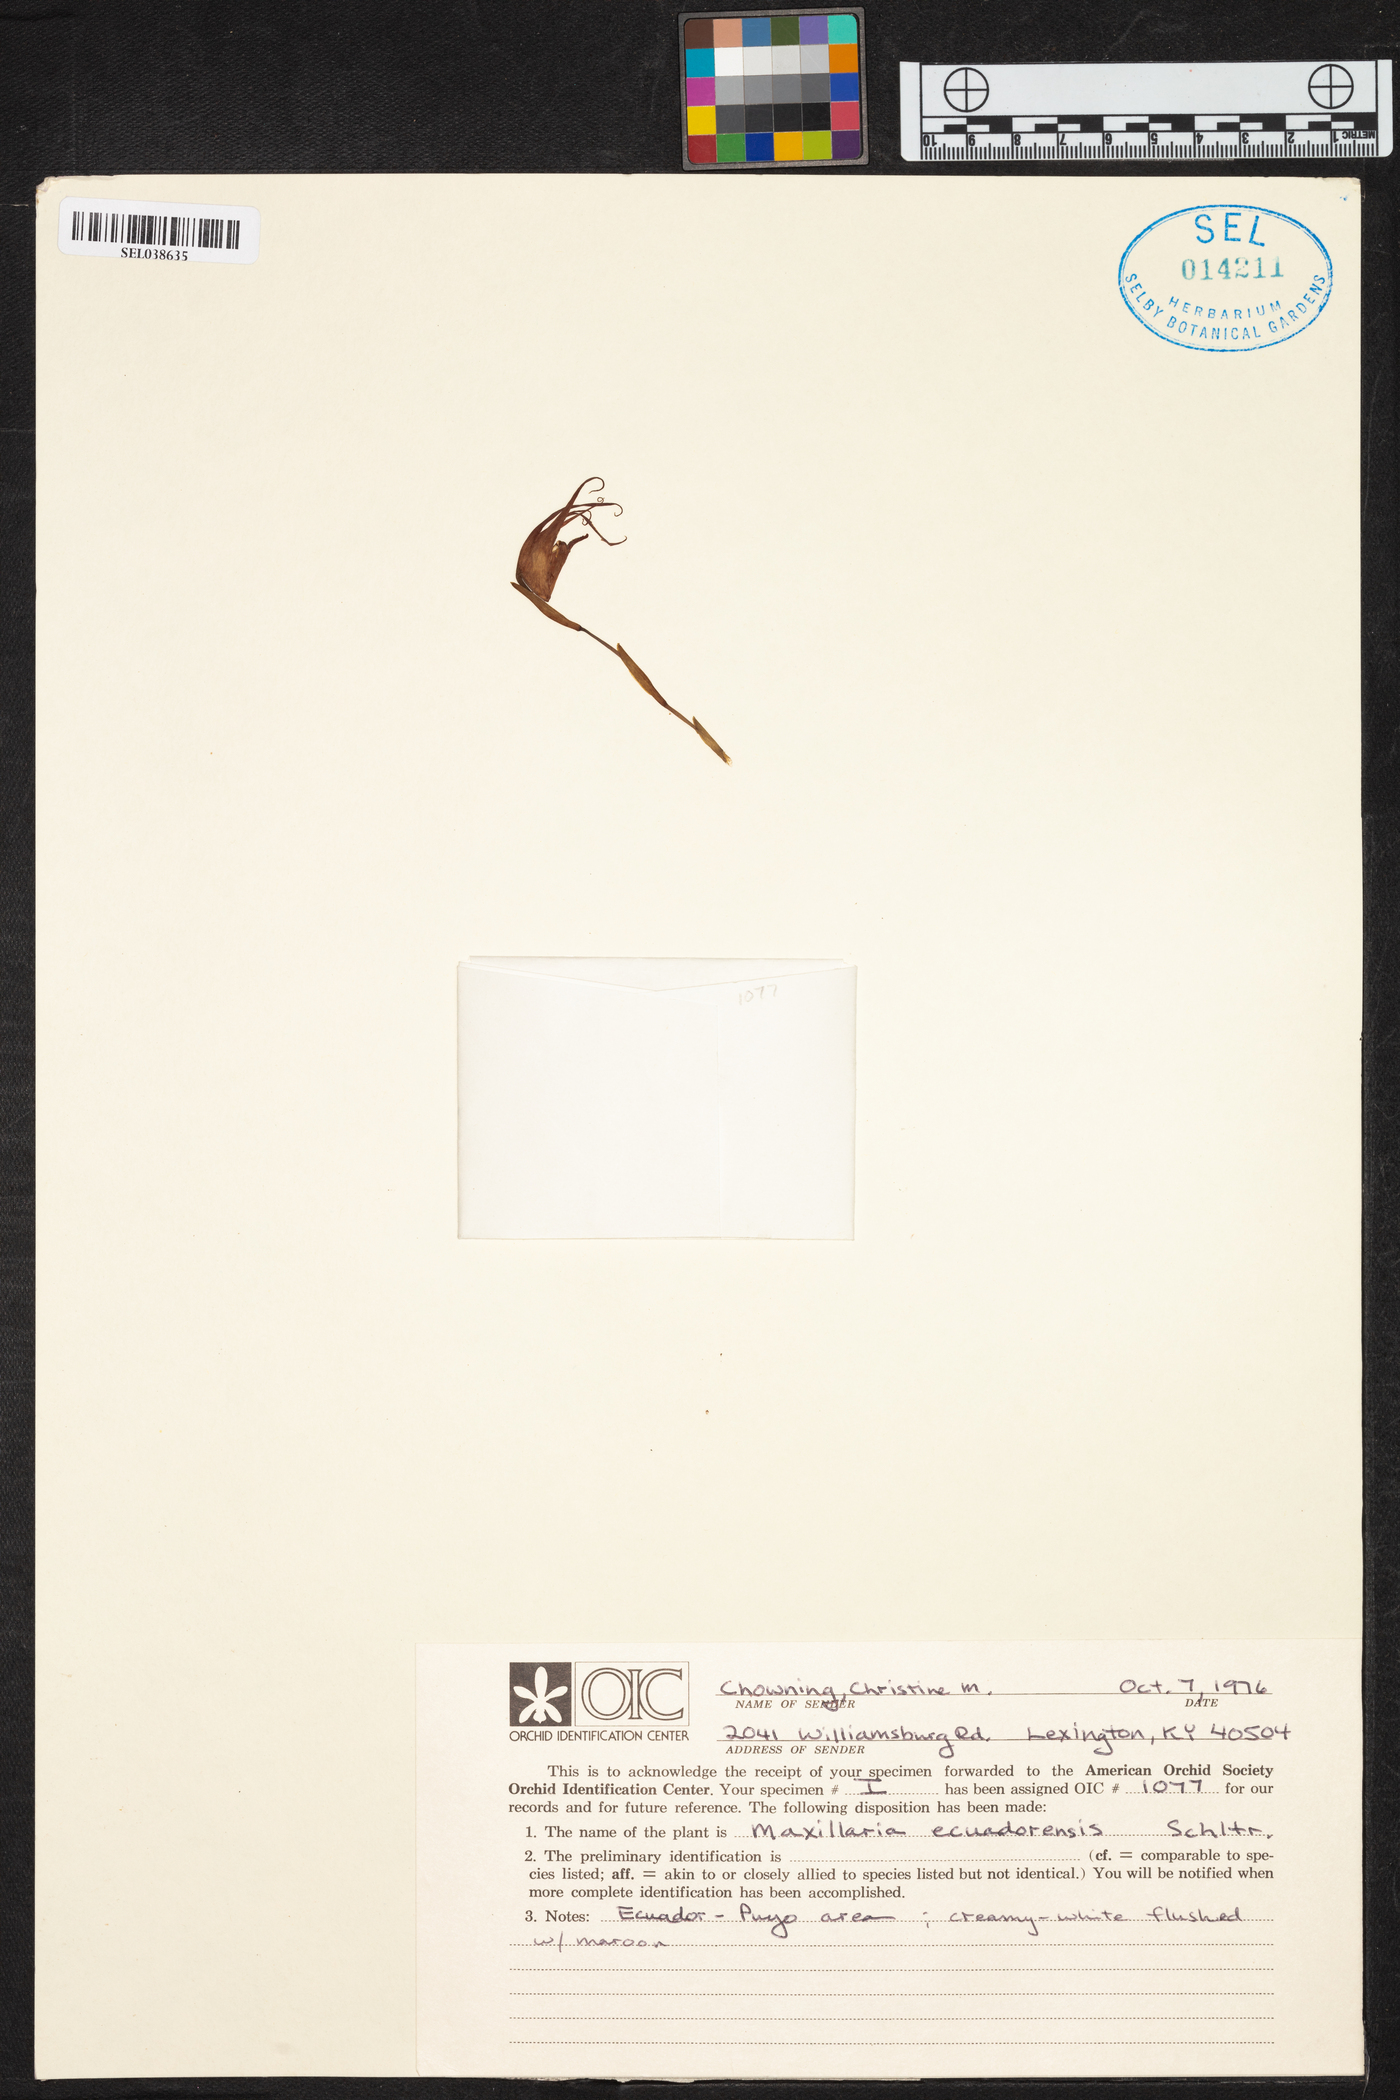 Maxillaria ecuadorensis image